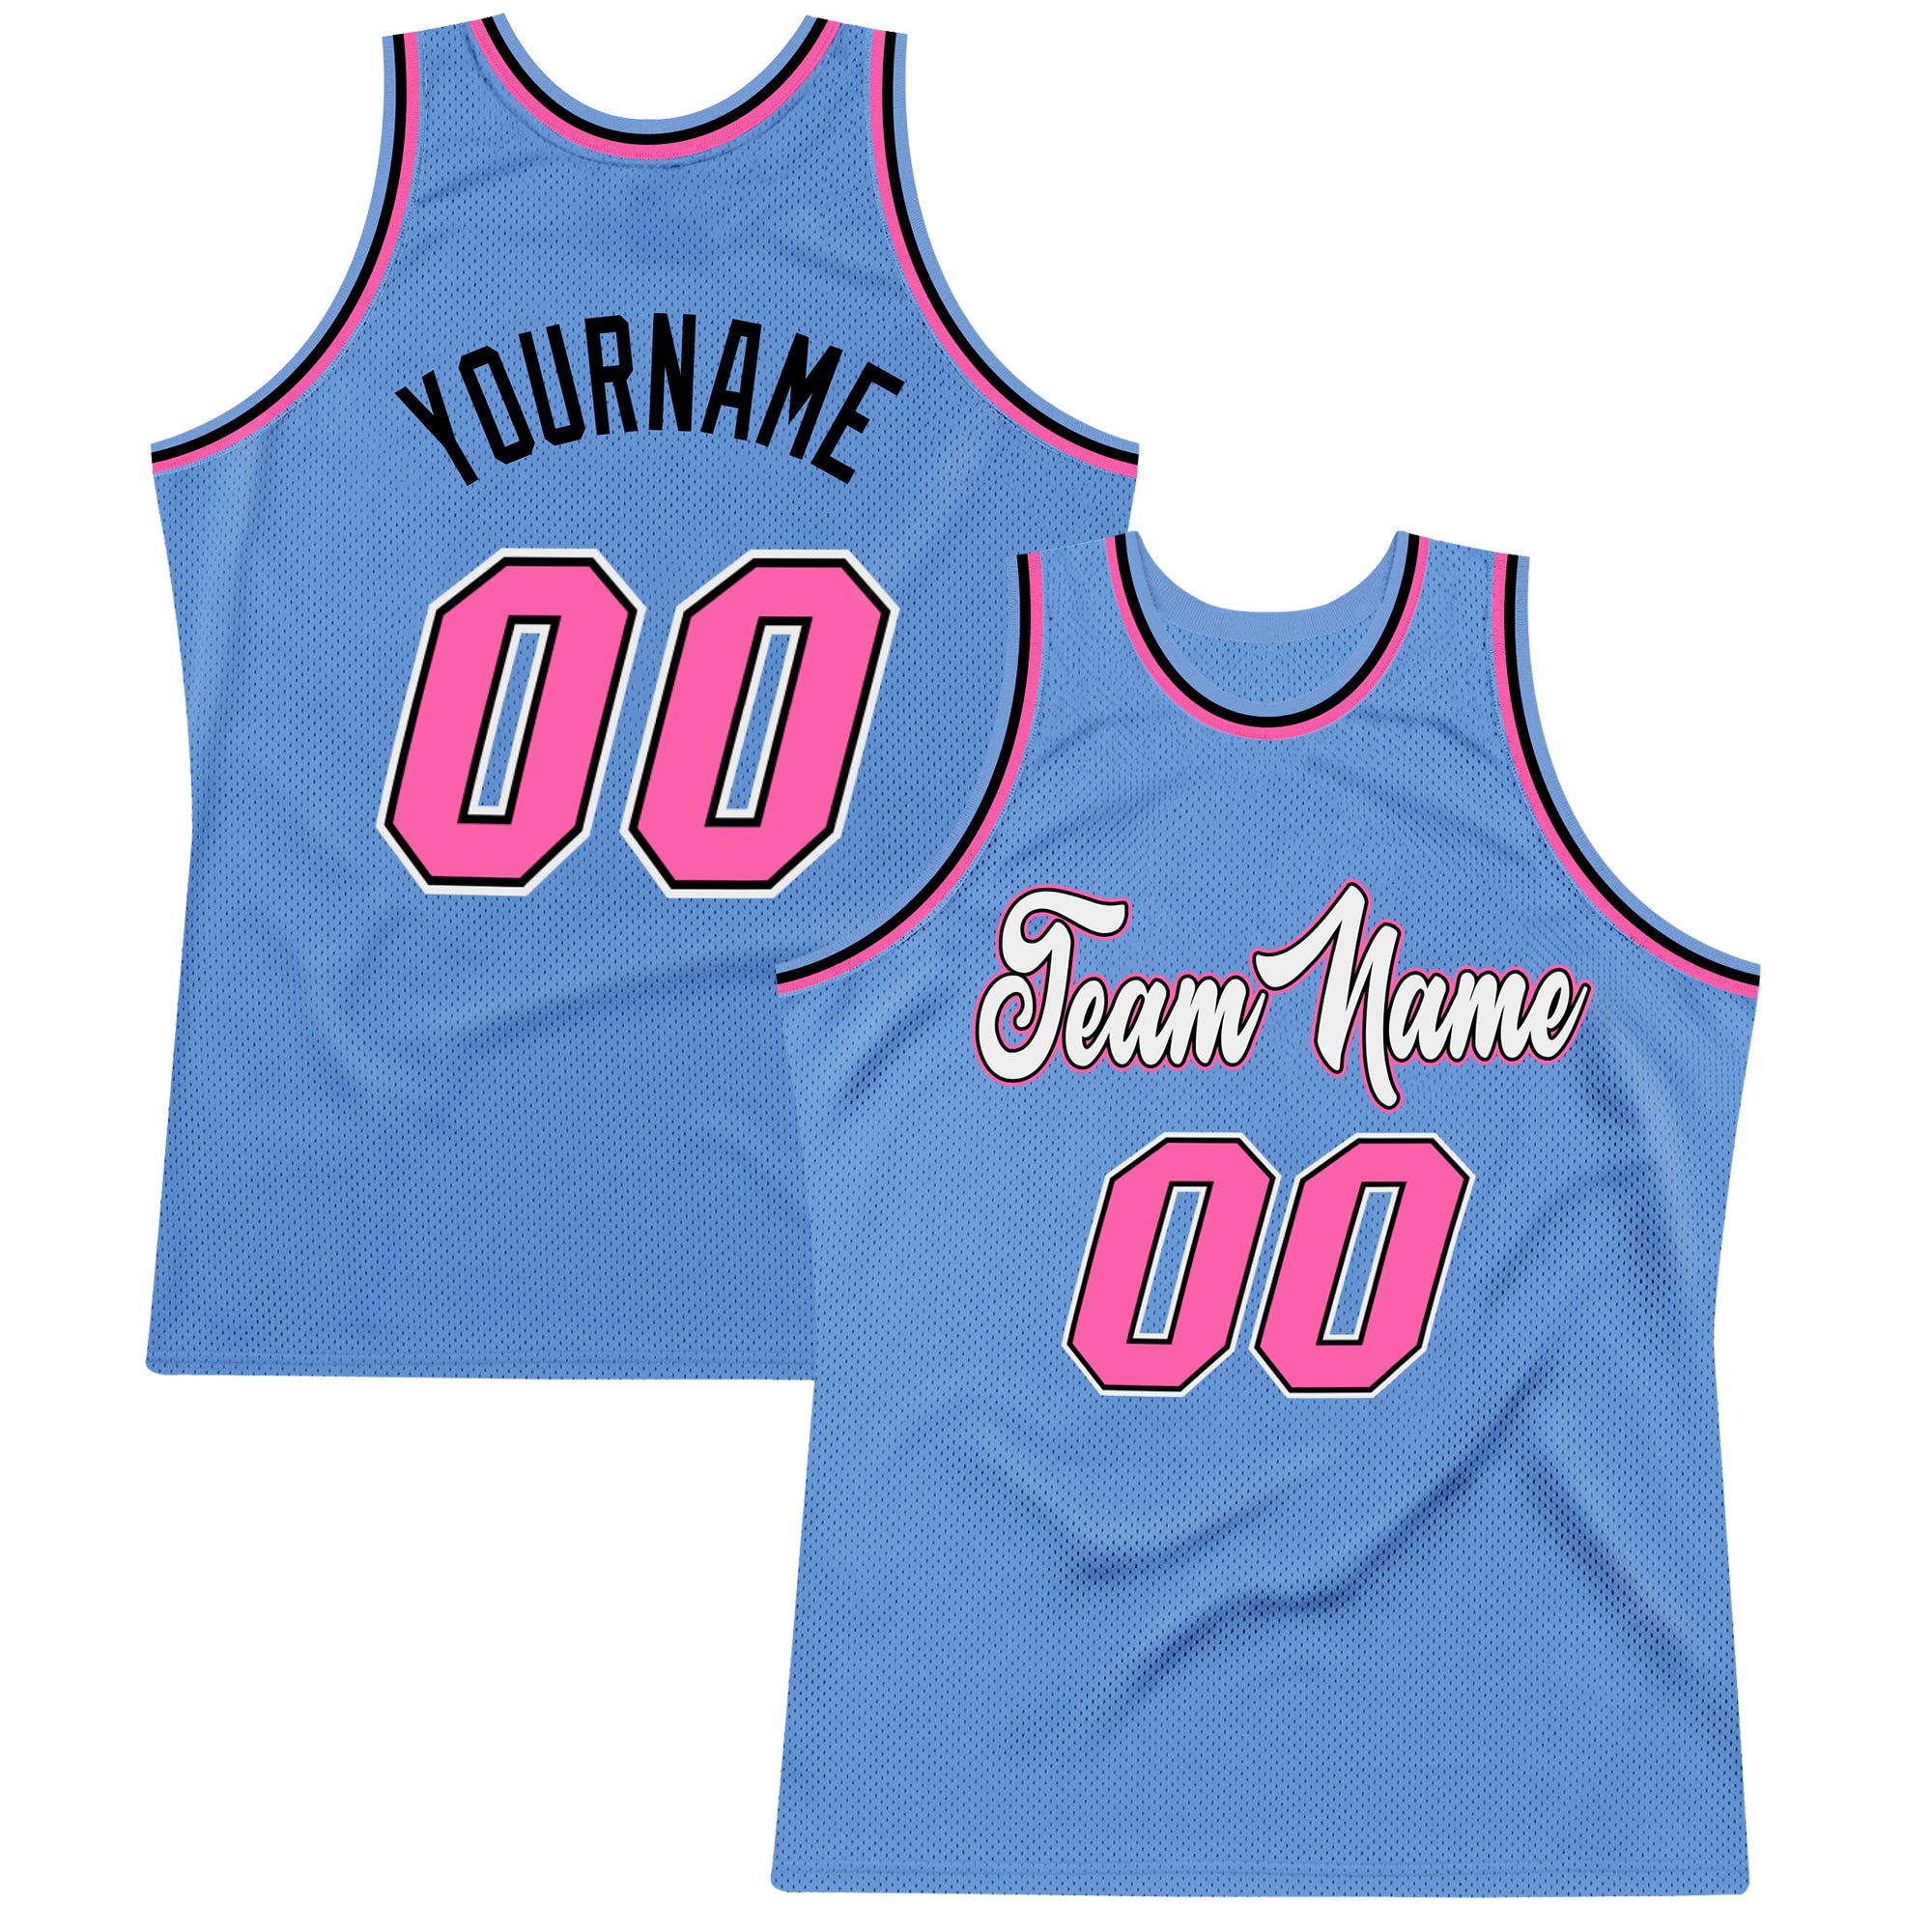 Custom Team Blue Basketball Authentic Black Throwback Jersey Black